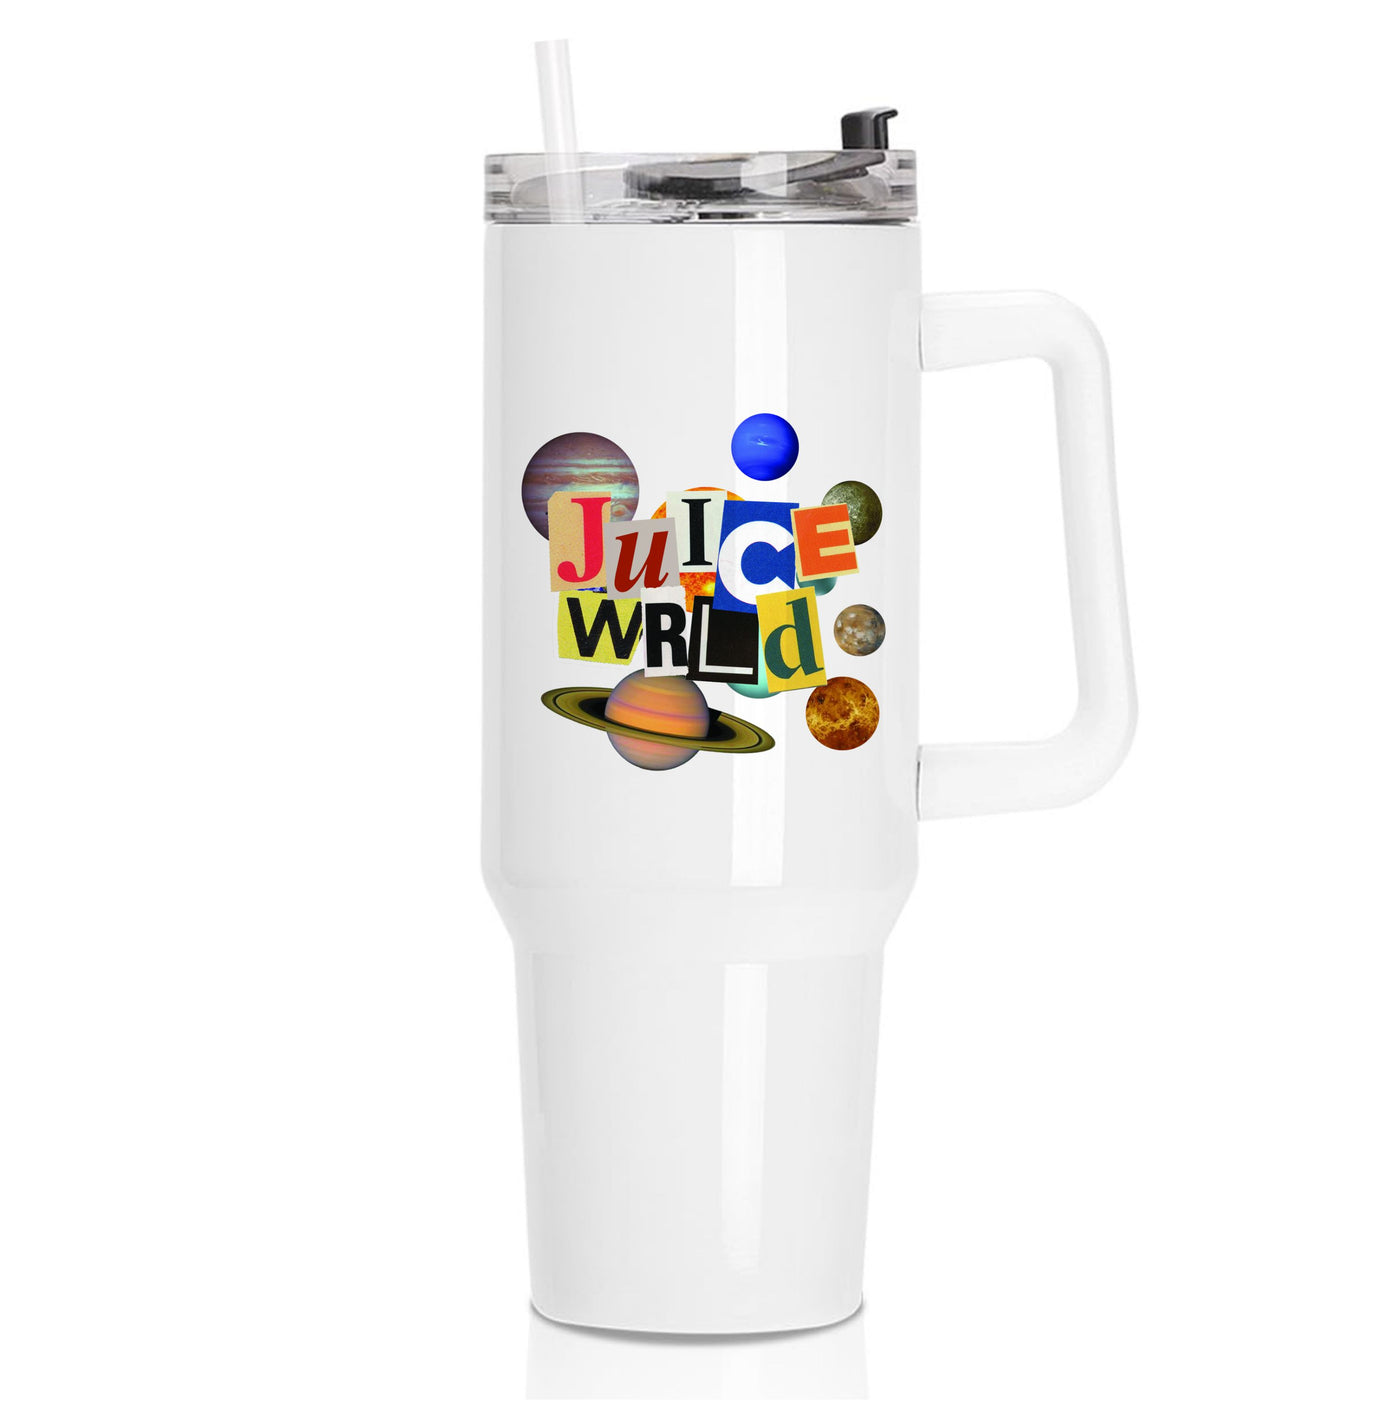 Orbit - Juice WRLD Tumbler